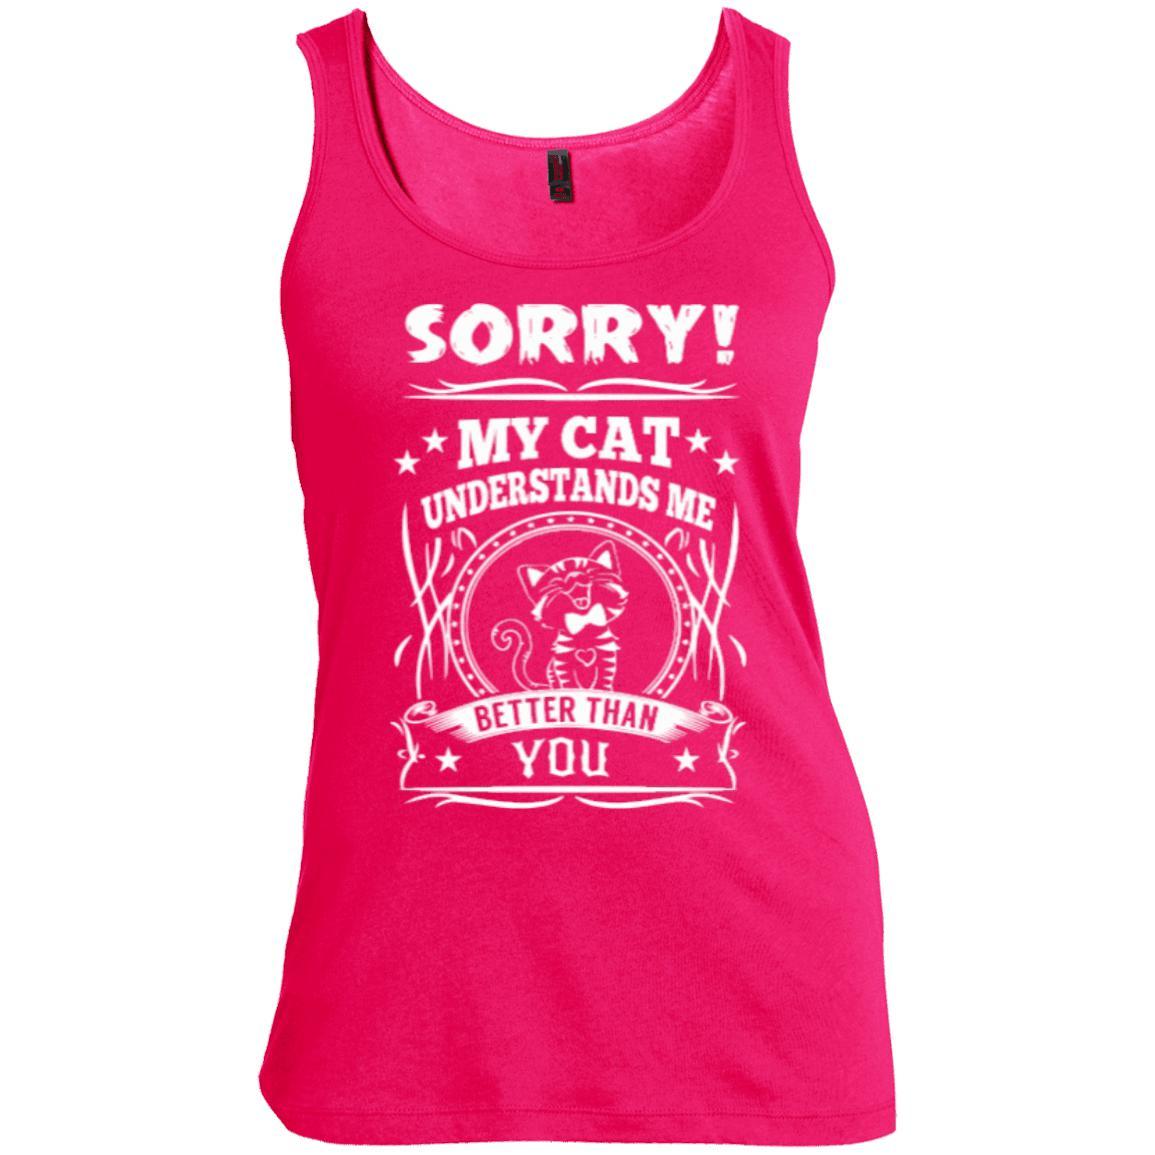 Cat Tee - My Cat Understand Me Better Than You - CatsForLife